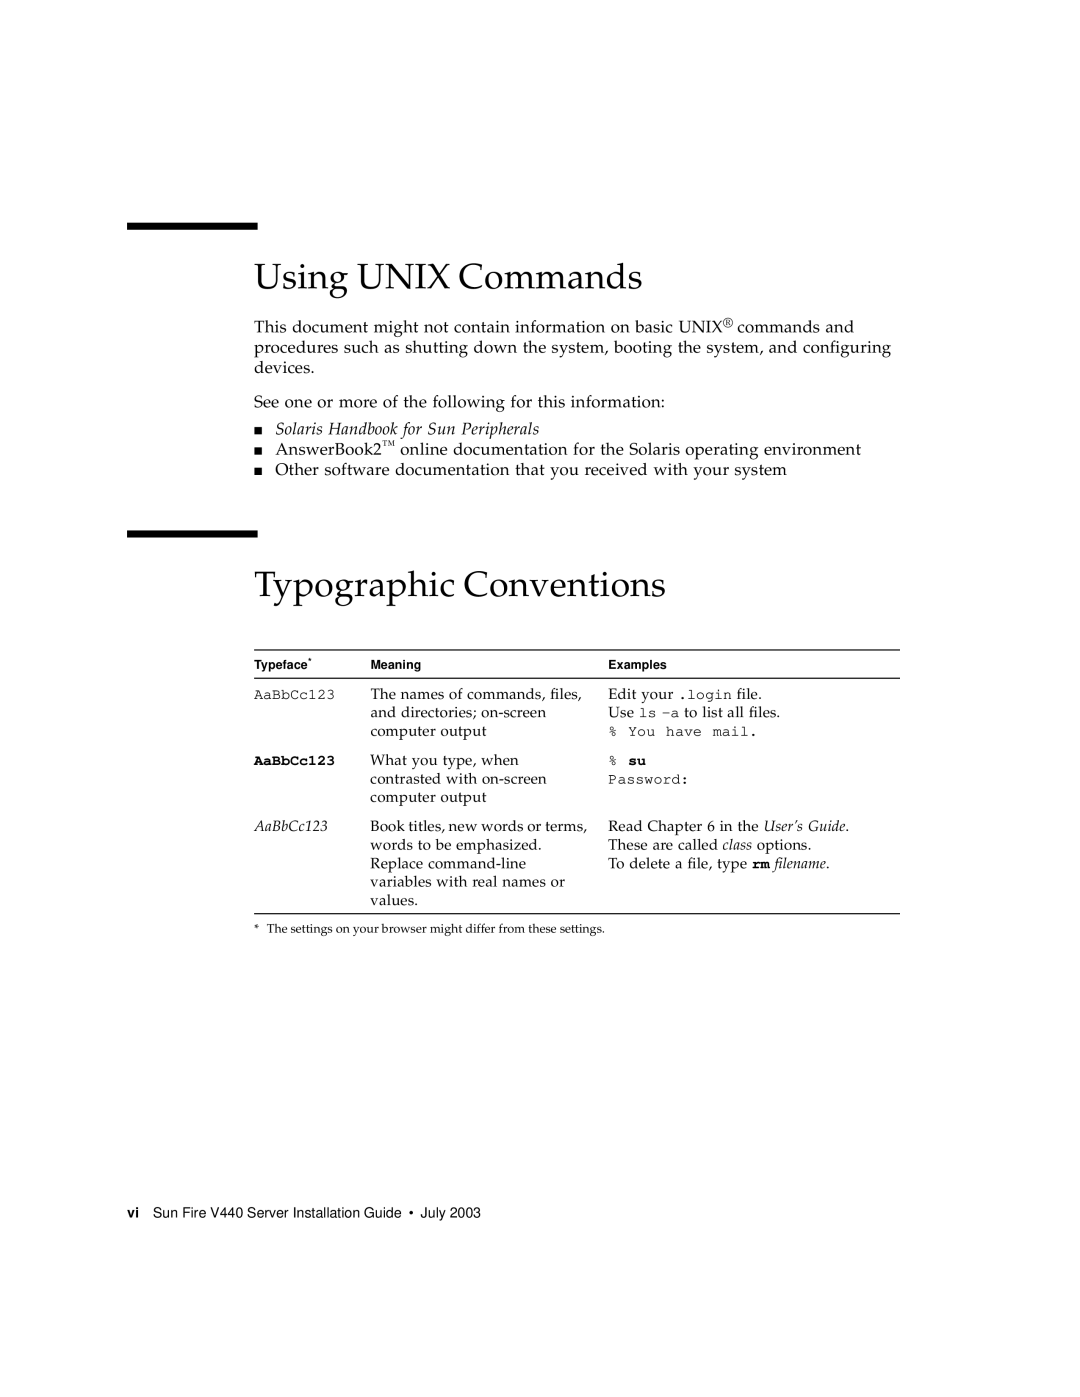 Sun Microsystems 816-7727-10 manual Using UNIX Commands, Typographic Conventions, Solaris Handbook for Sun Peripherals 